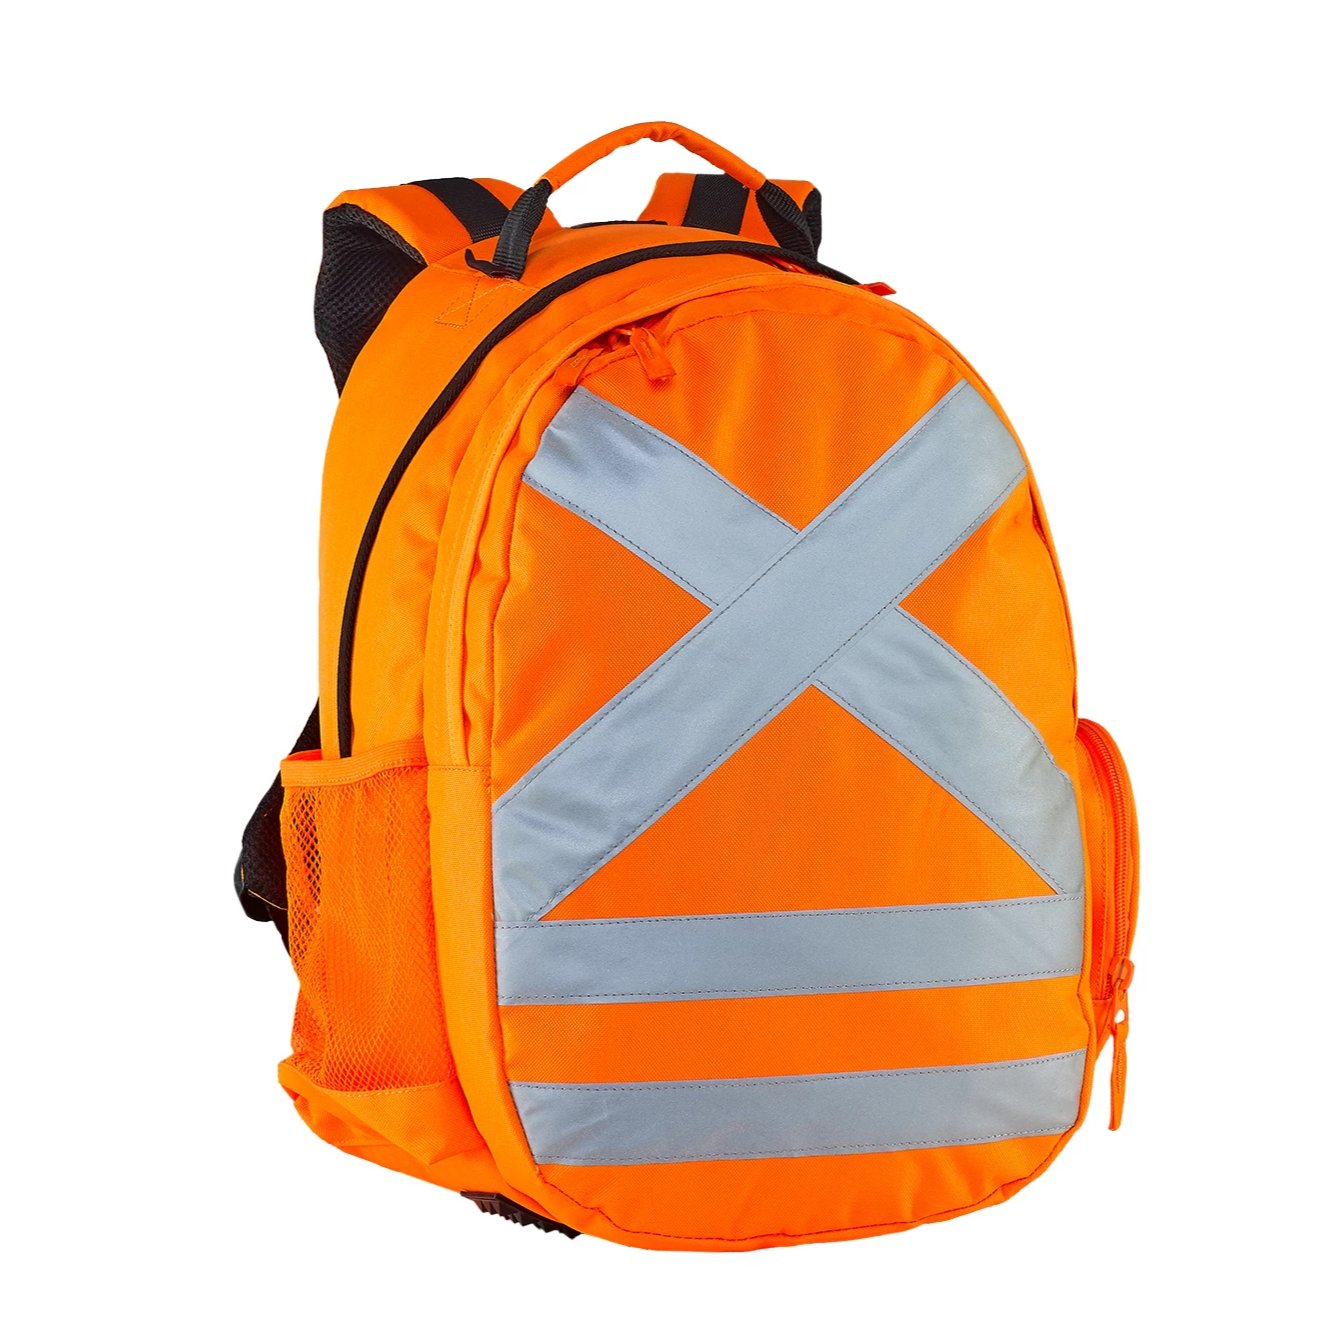 Caribee Calibre 26L high visibility backpack in orange